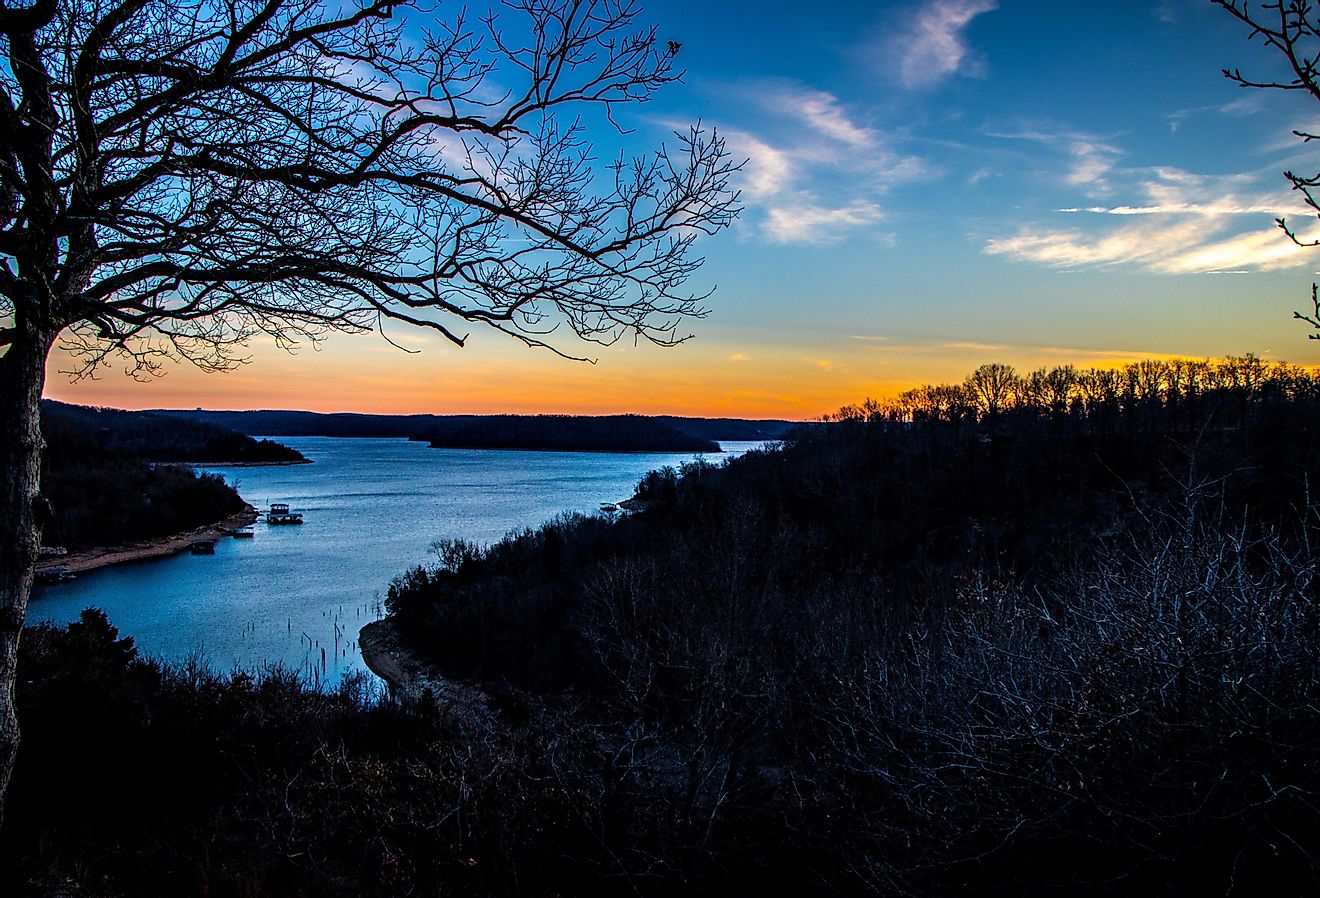 Eureka Springs, Arkansas sunset on the lake from a mountaintop. Image credit Fluffy Watson via Shutterstock.